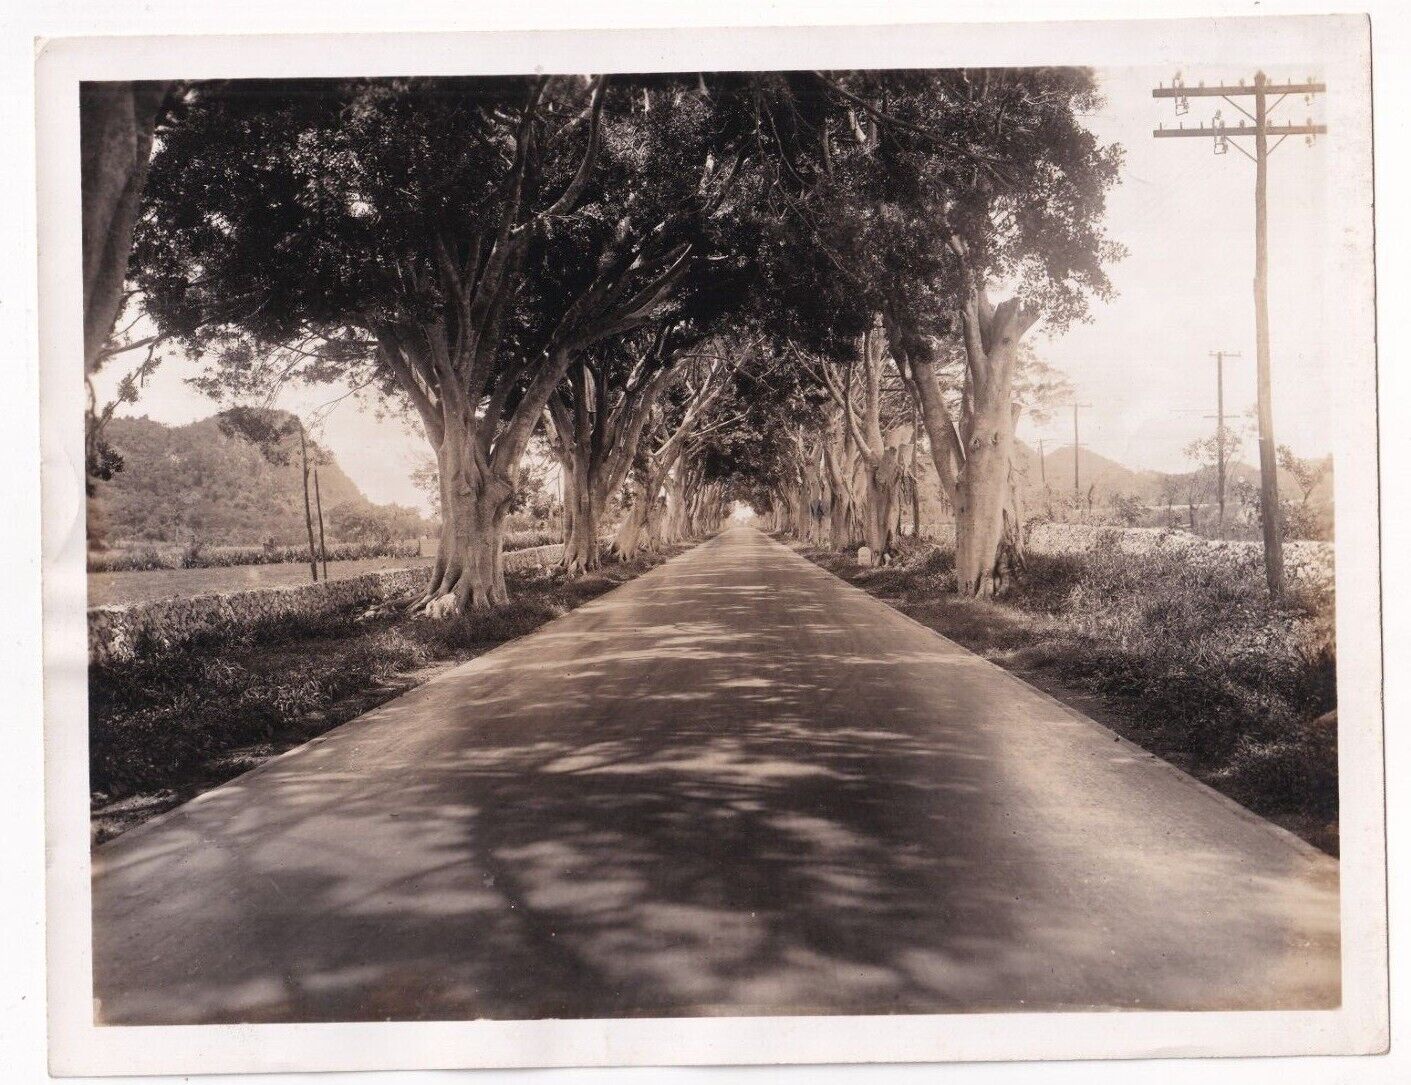 CUBAN PUBLIC WORKS NEW ROAD BY THE NATURE CUBA 1940s VINTAGE ORIG Photo Y J 349